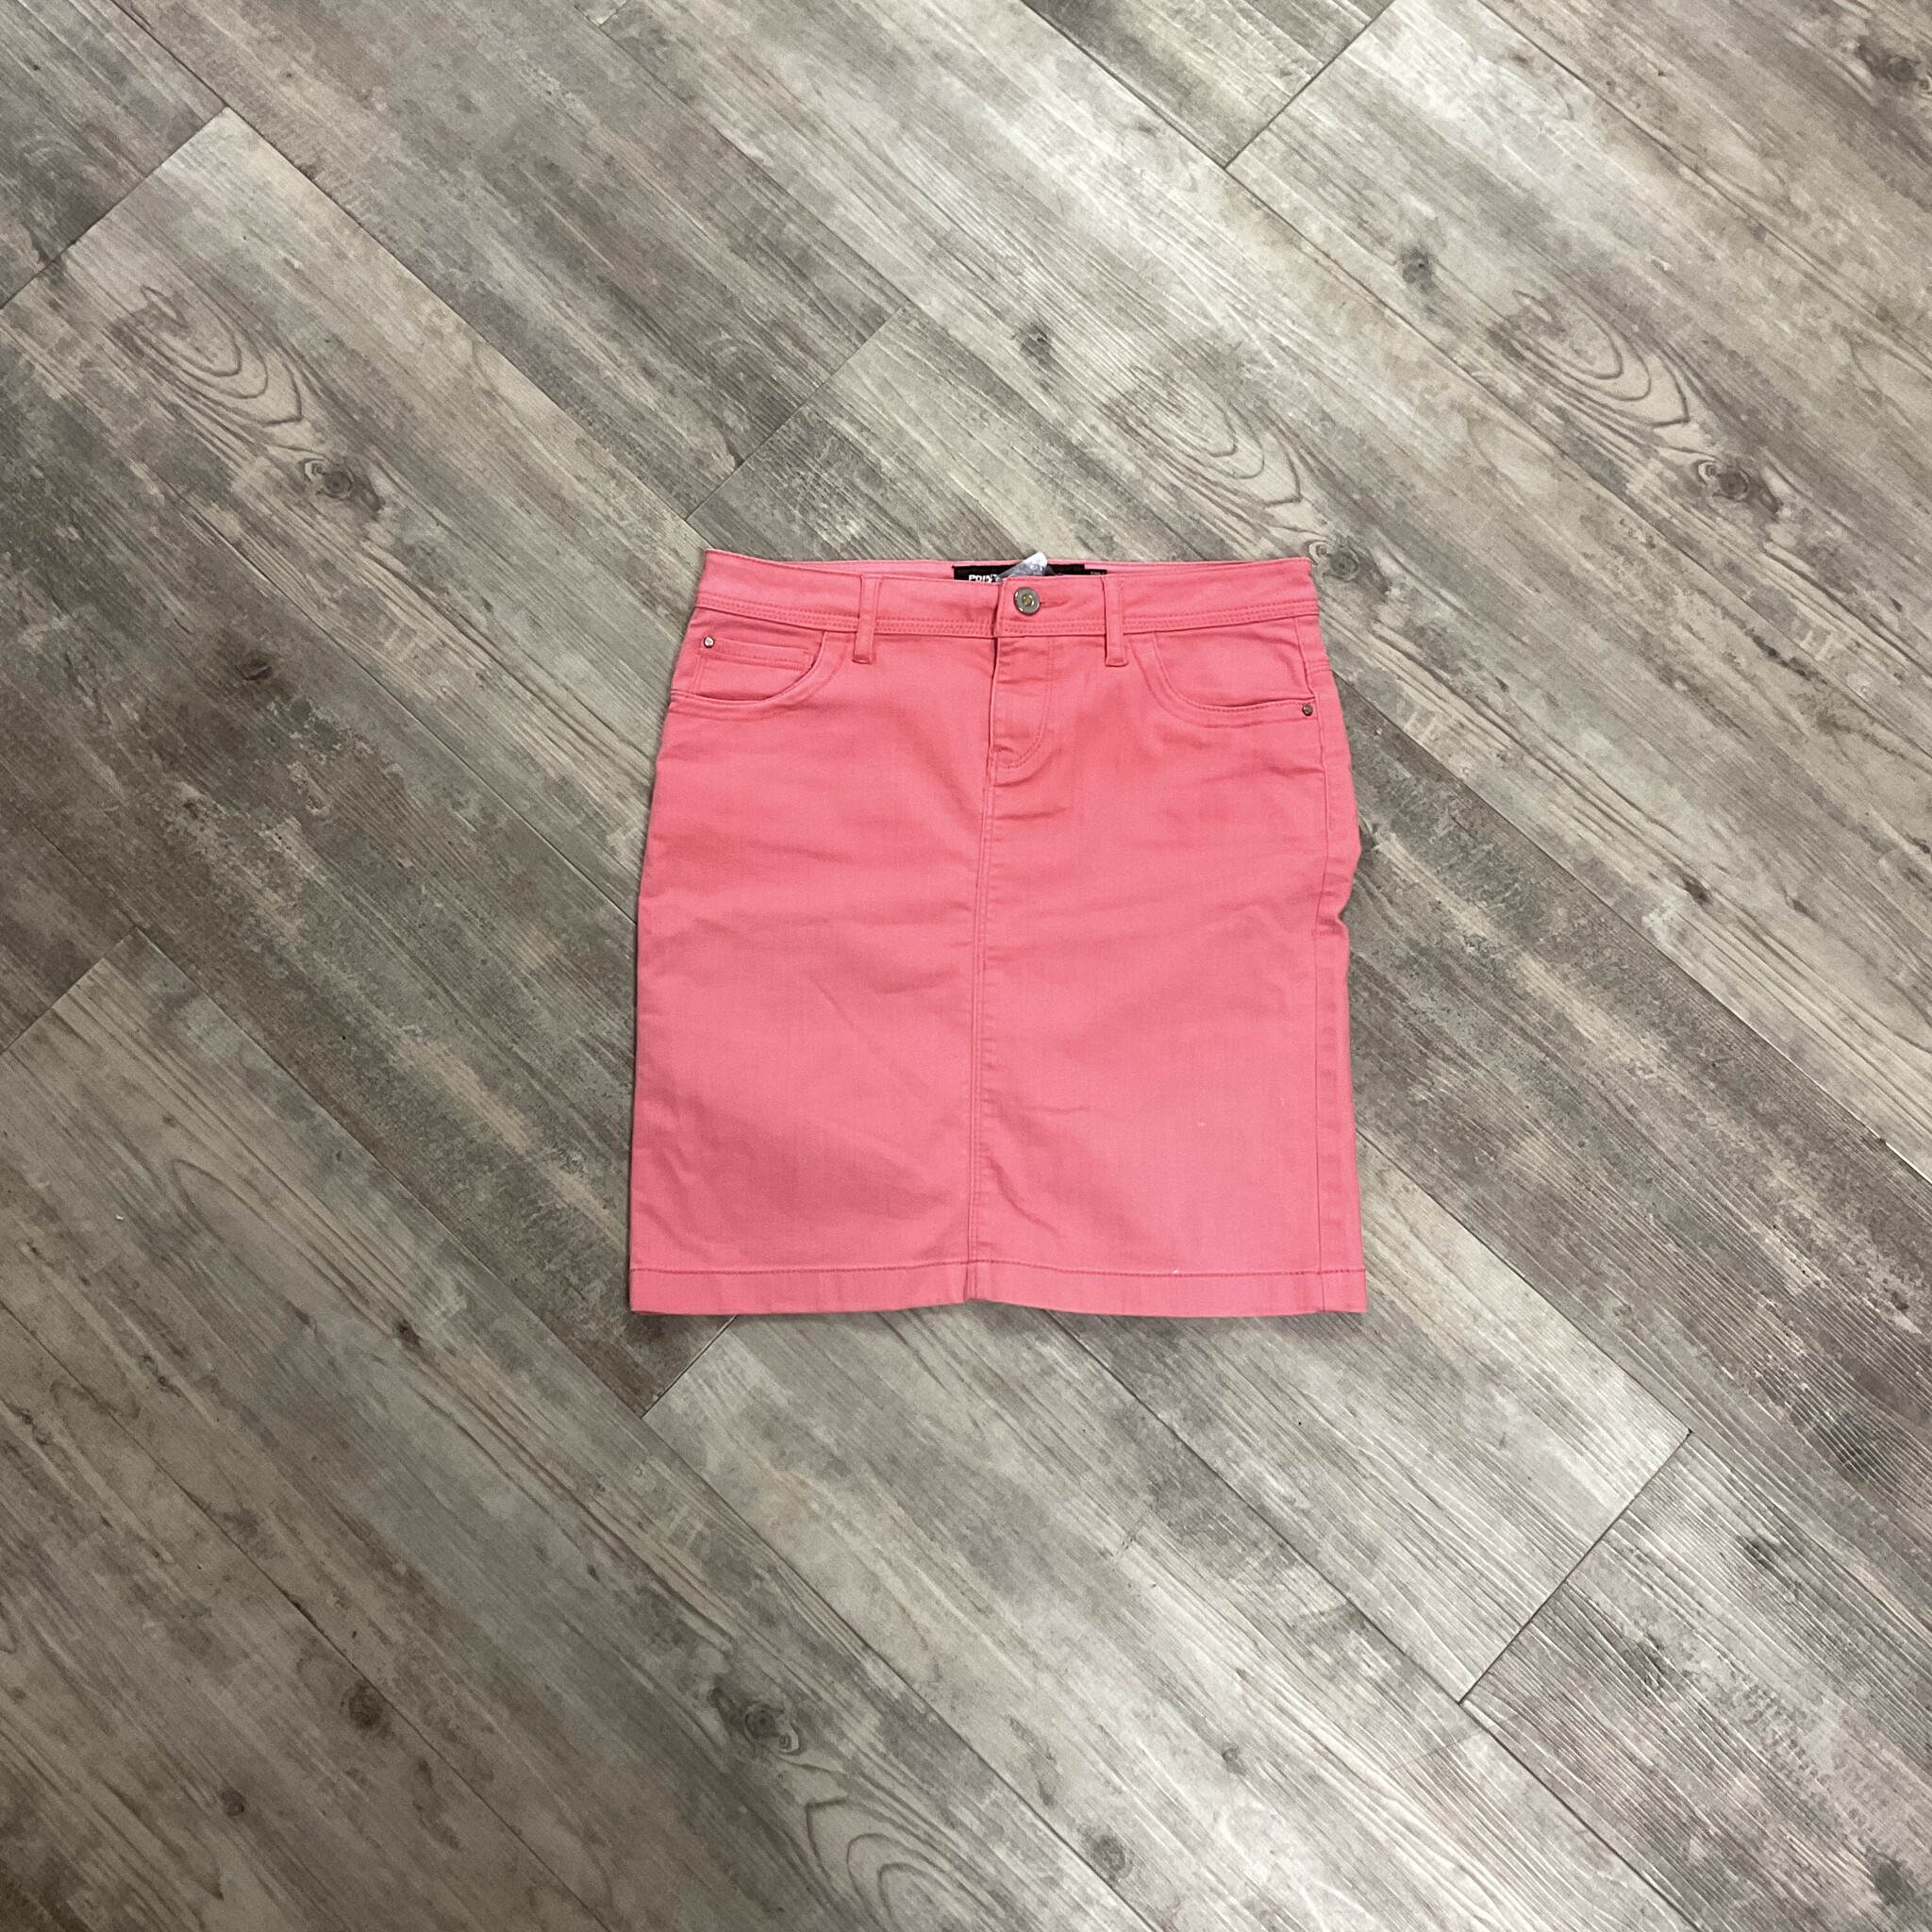 Pink Denim Skirt - Size 0